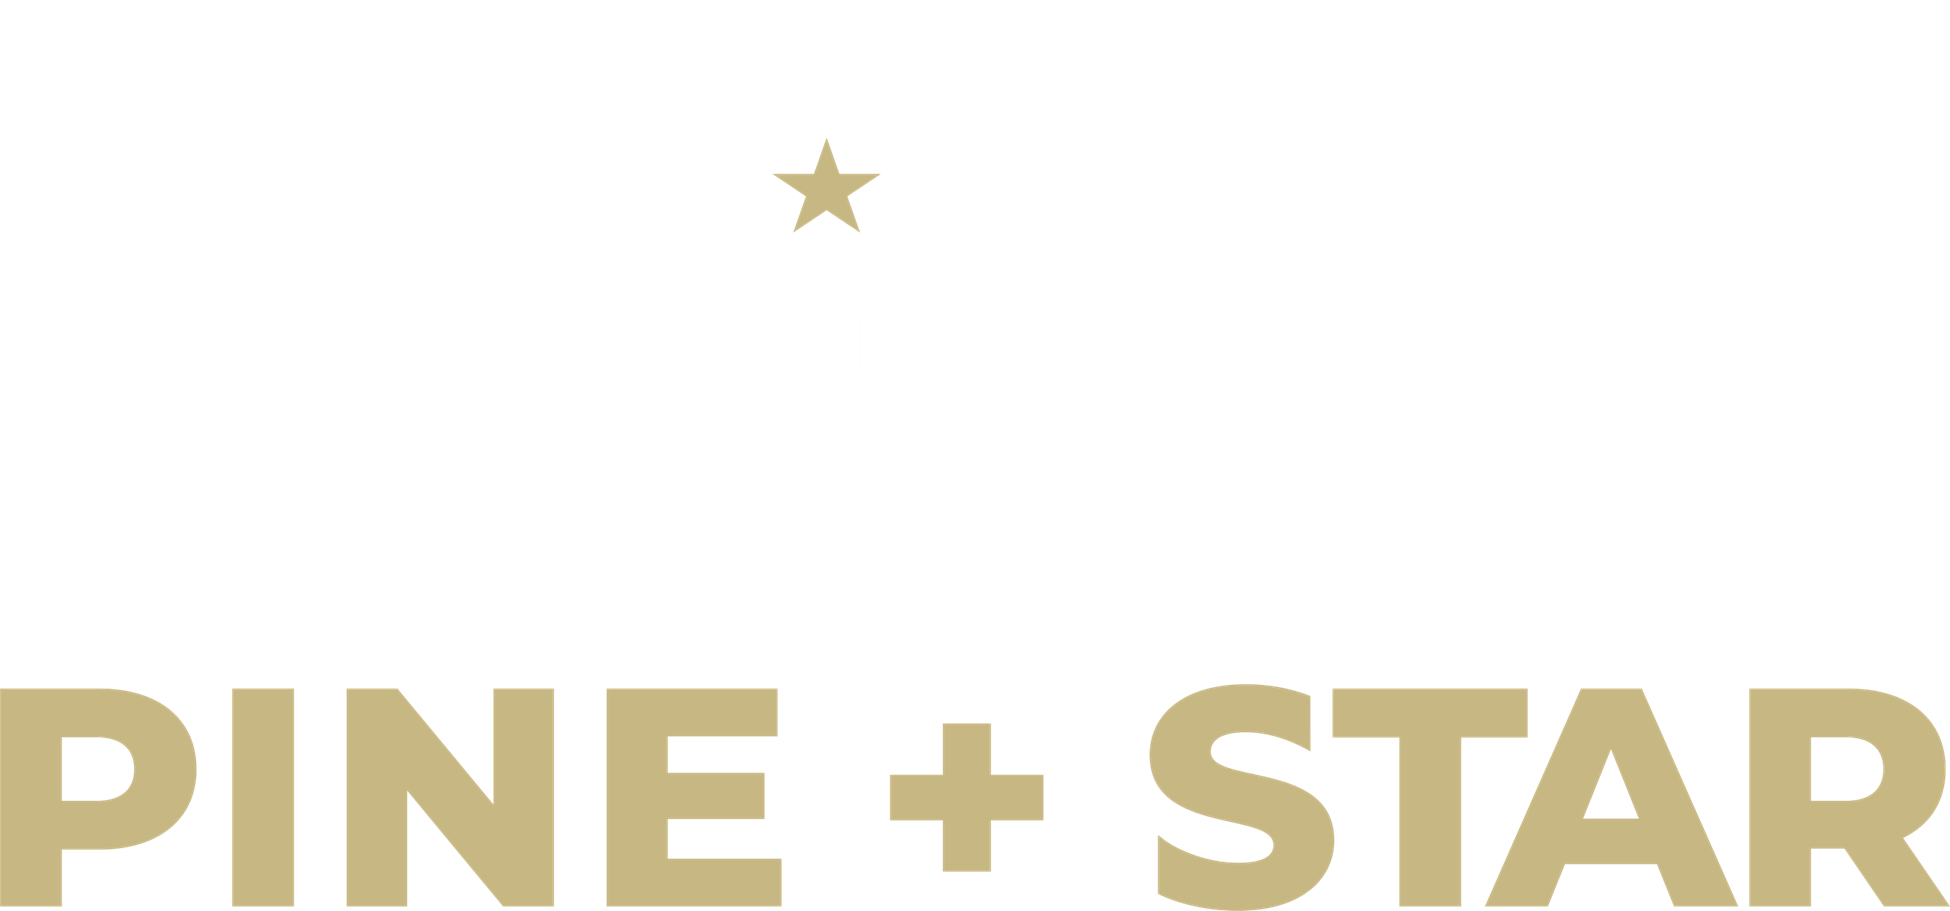 Pine + Star Cannabis Brand Logo